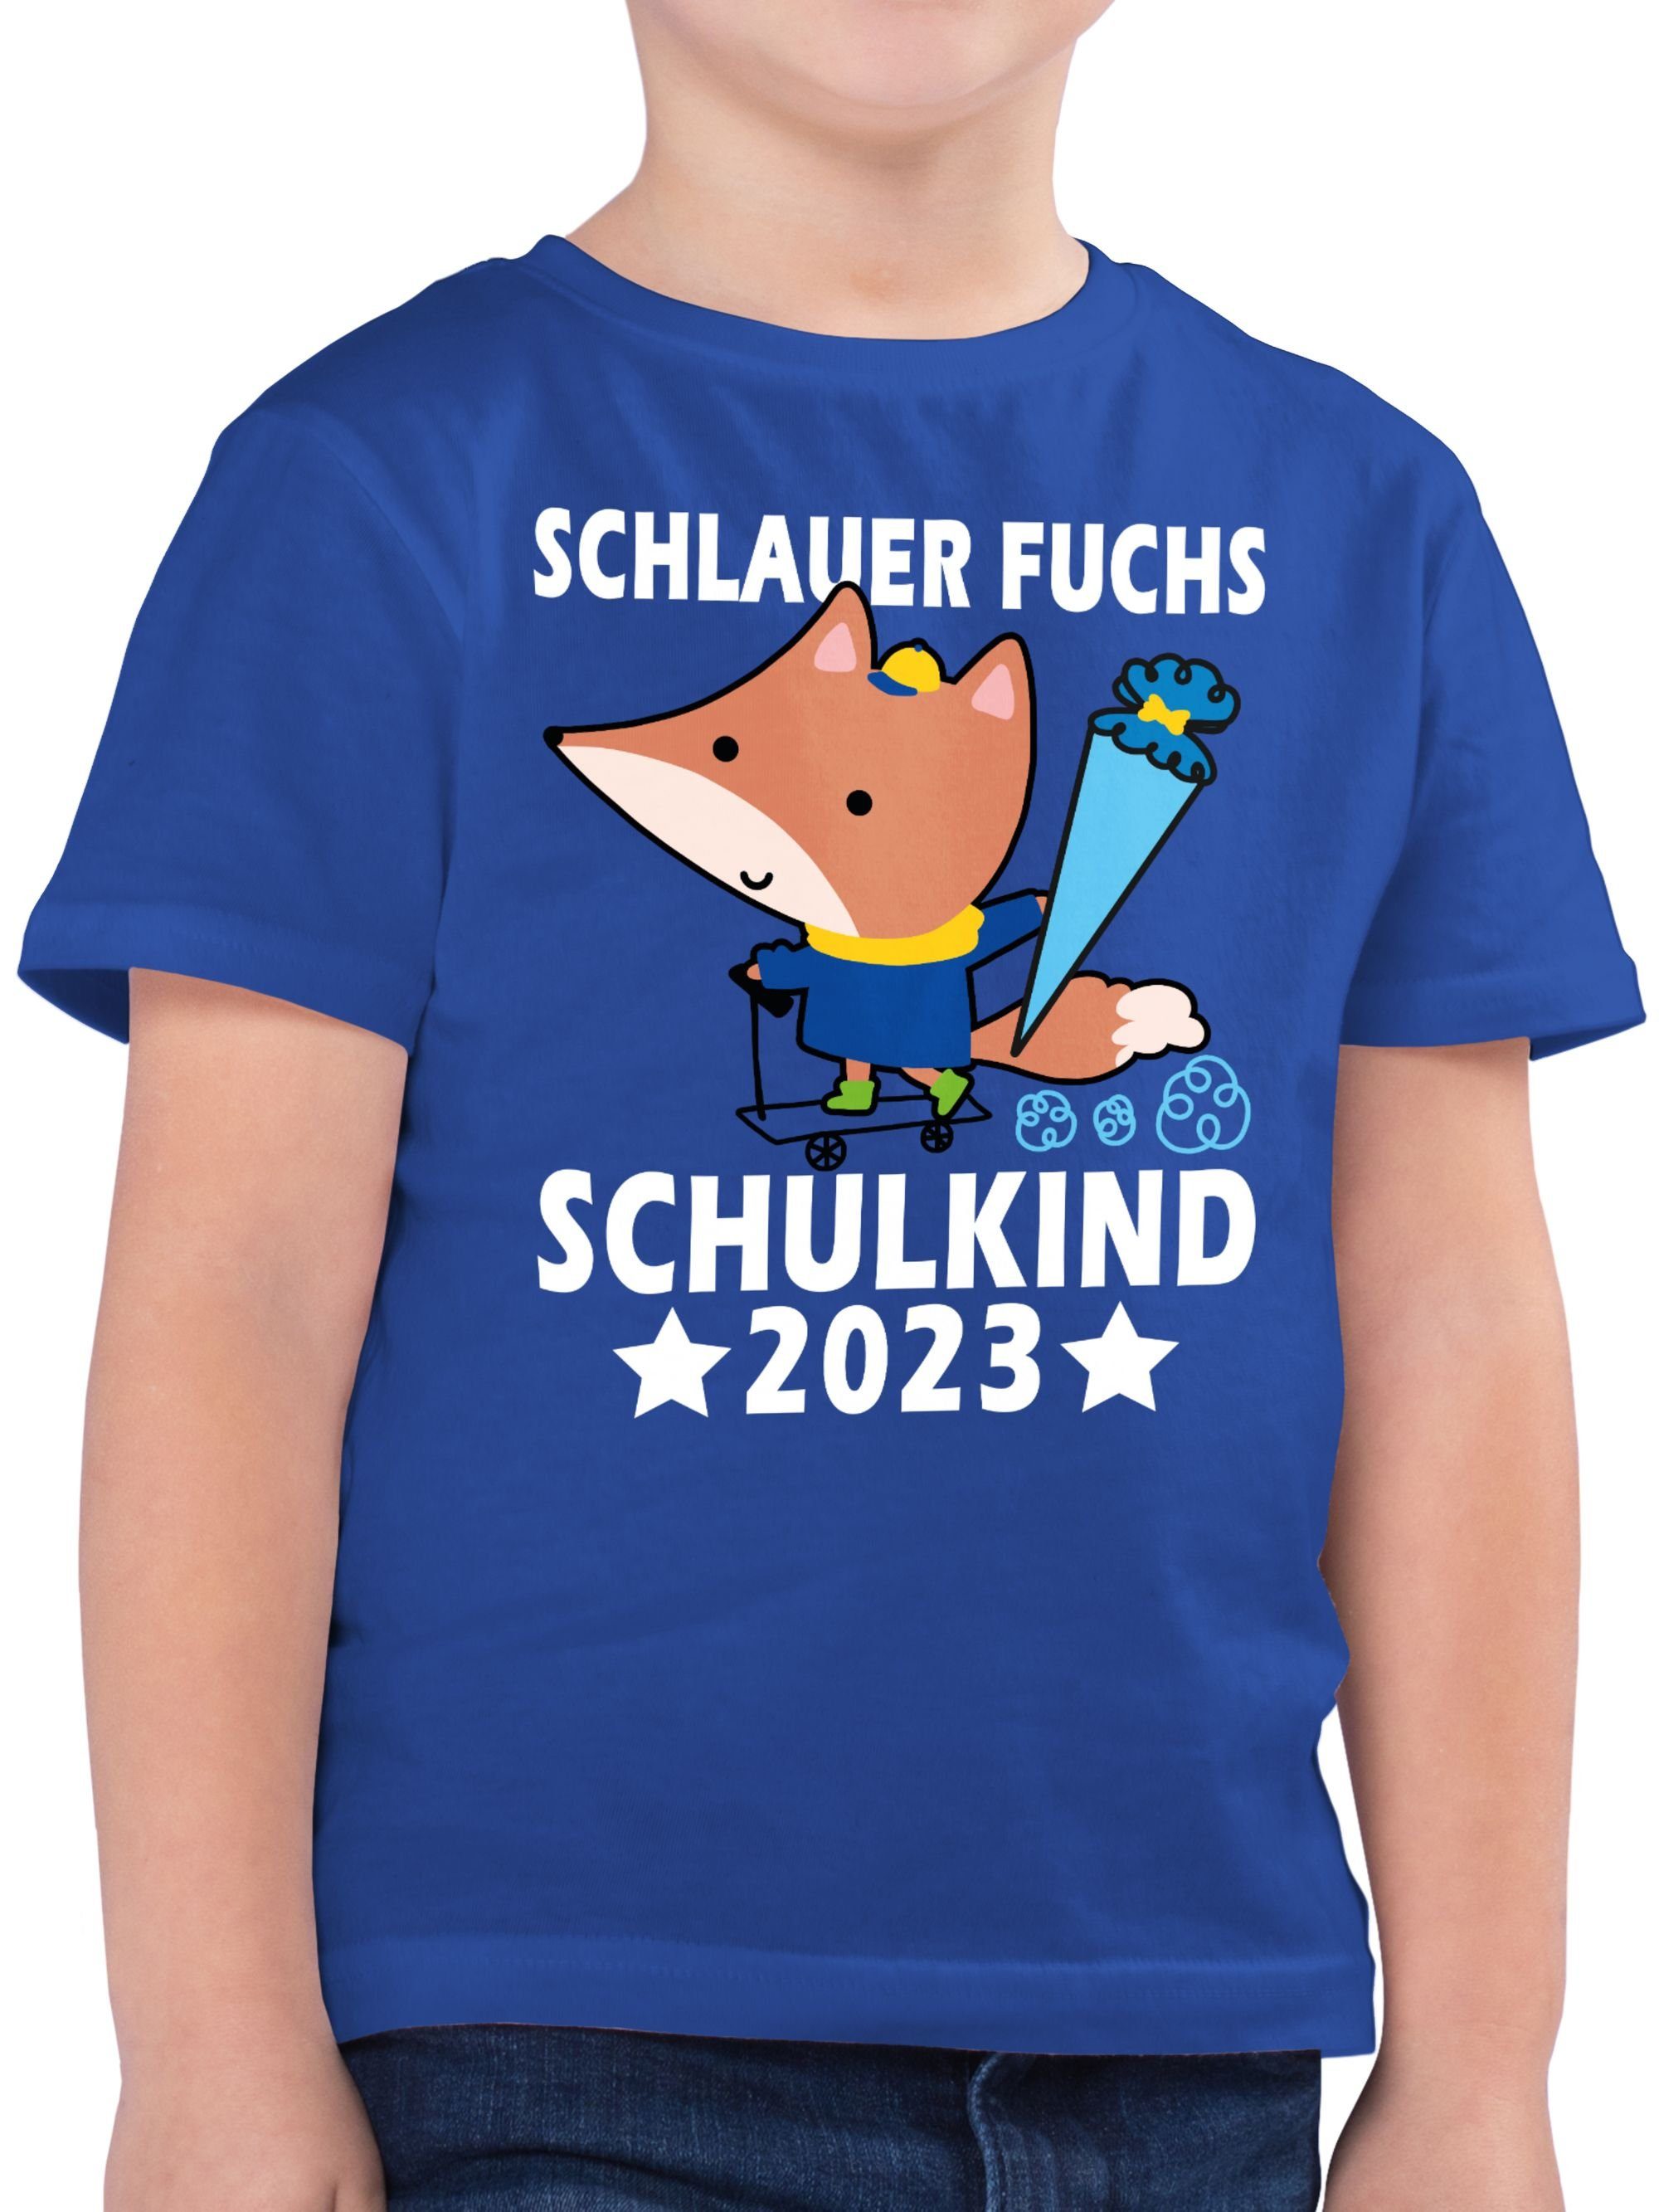 Schulkind Schulanfang Junge Geschenke Fuchs T-Shirt 2023 Schlauer 01 Einschulung Royalblau Shirtracer